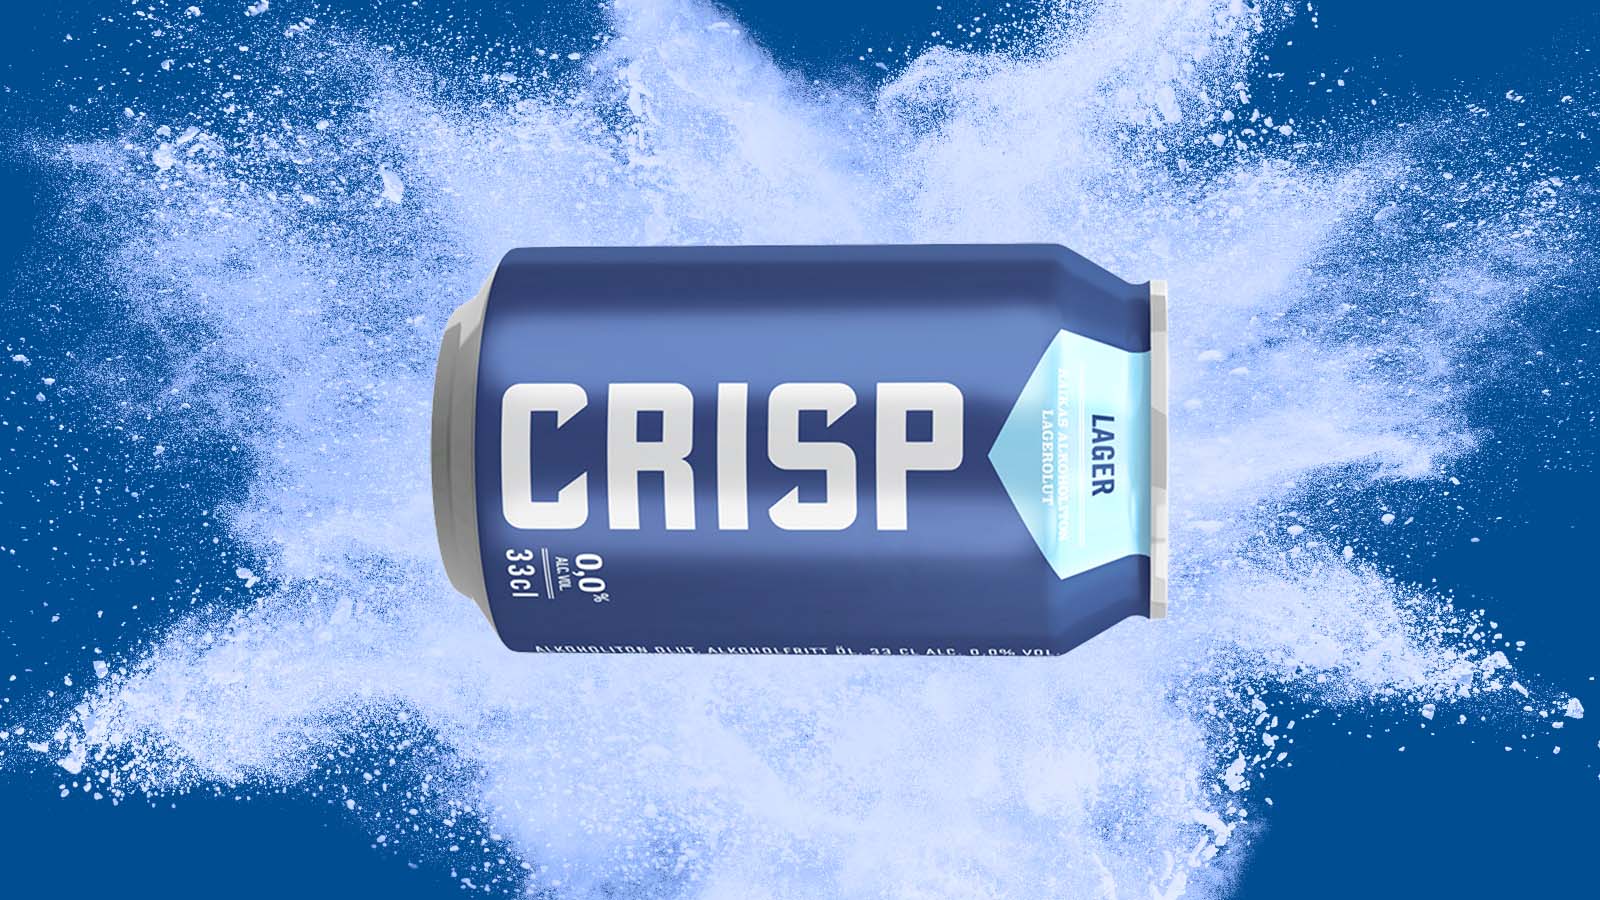 crisp